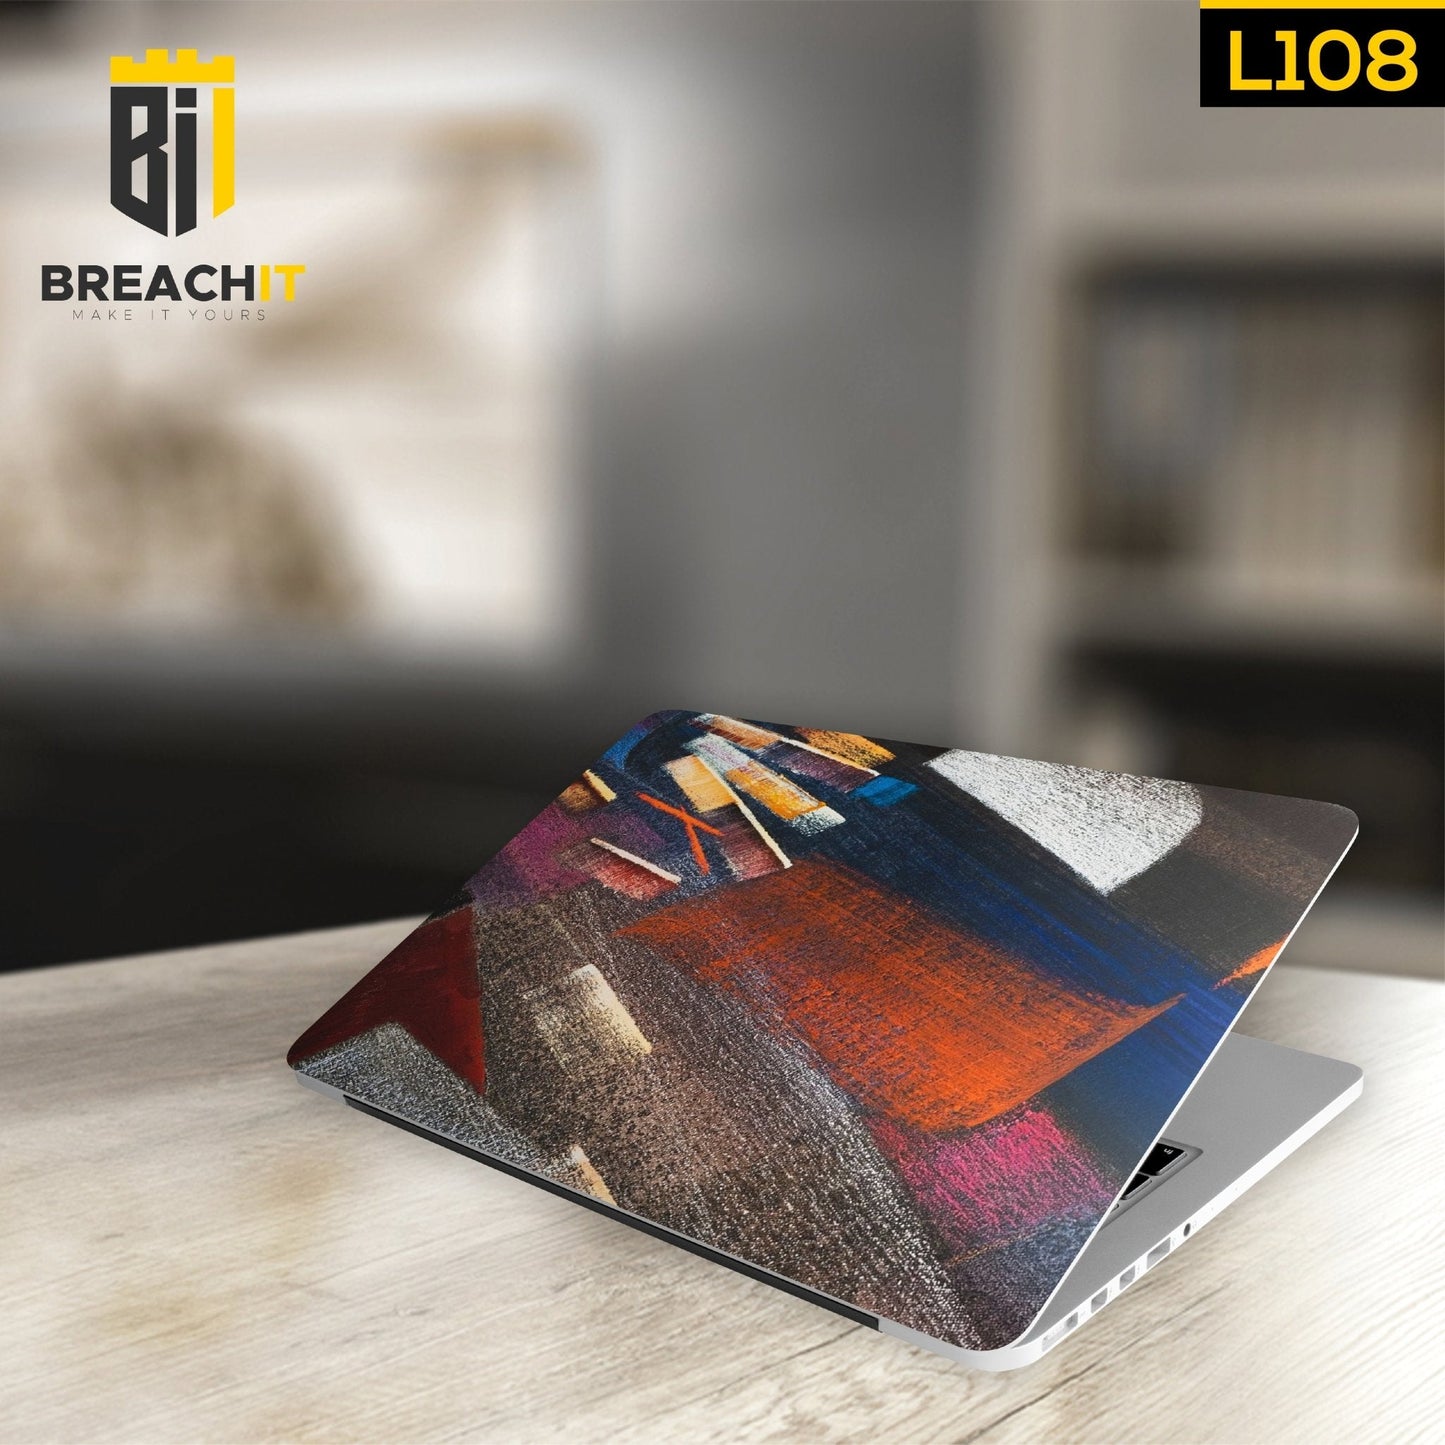 L108 Abstract Laptop Skin - BREACHIT